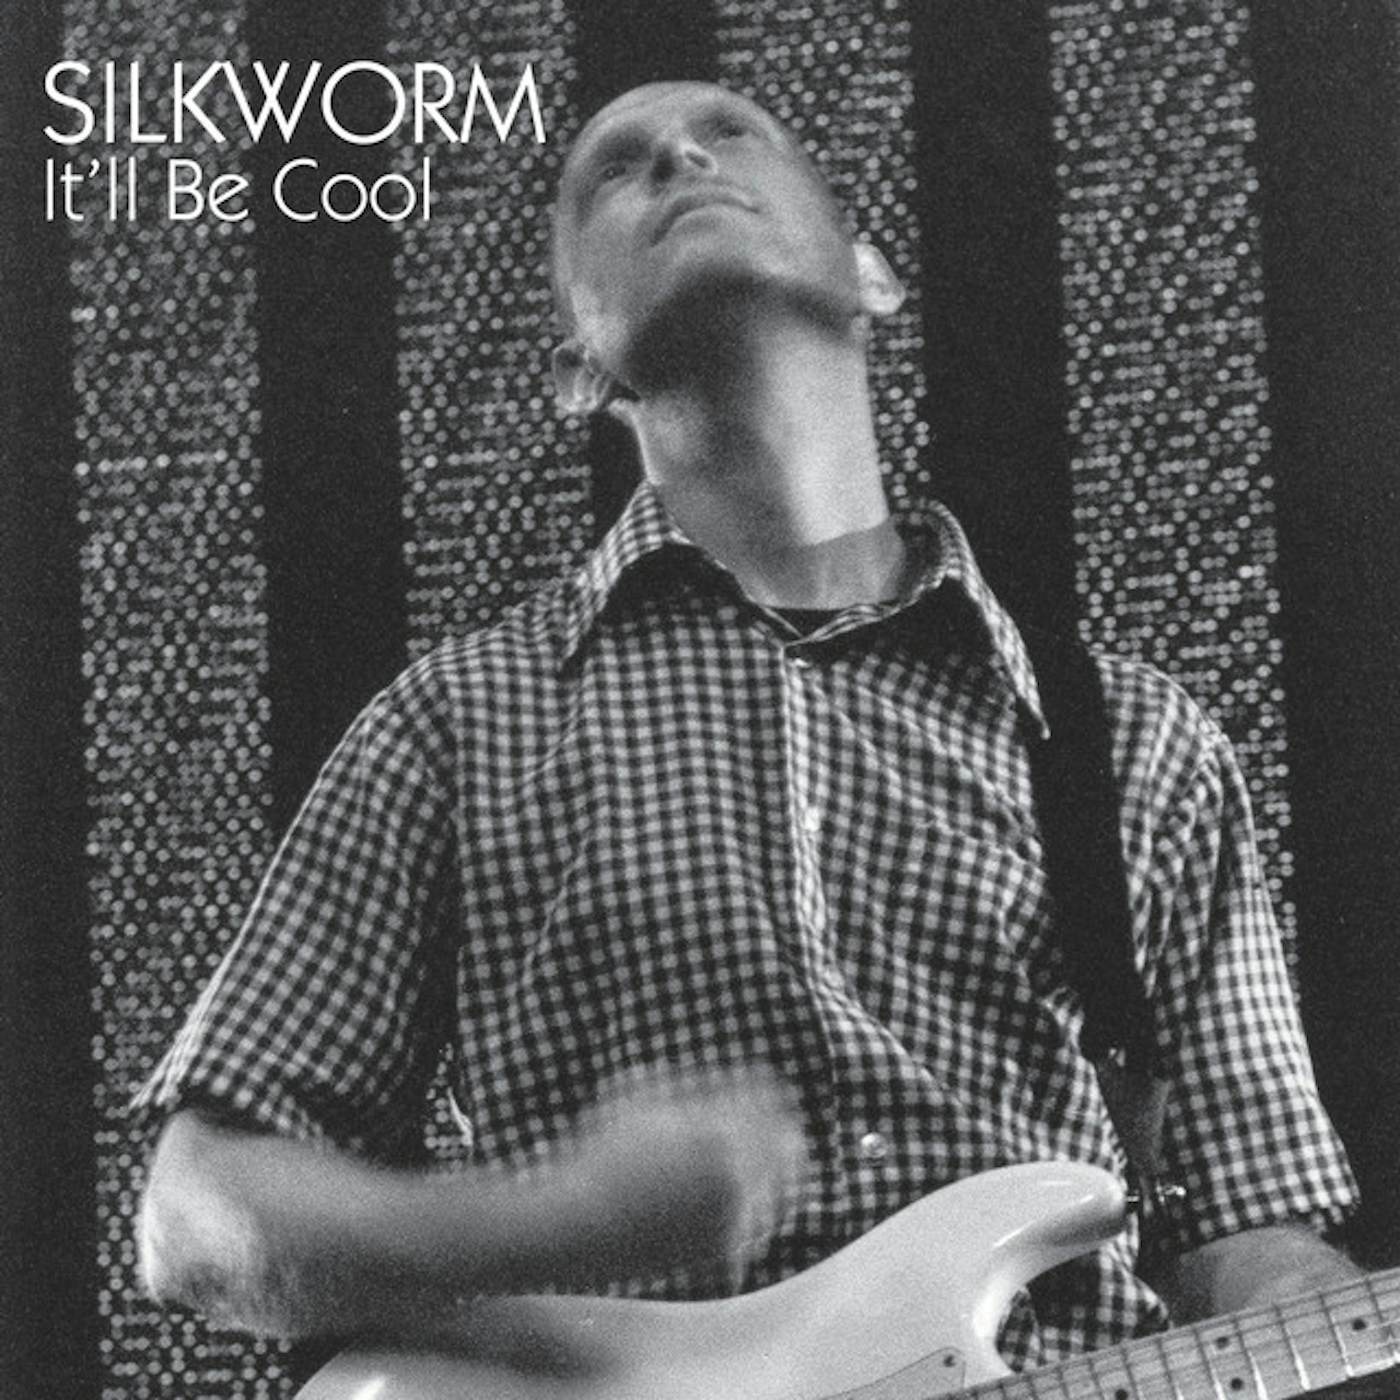 Silkworm It'll Be Cool Vinyl Record